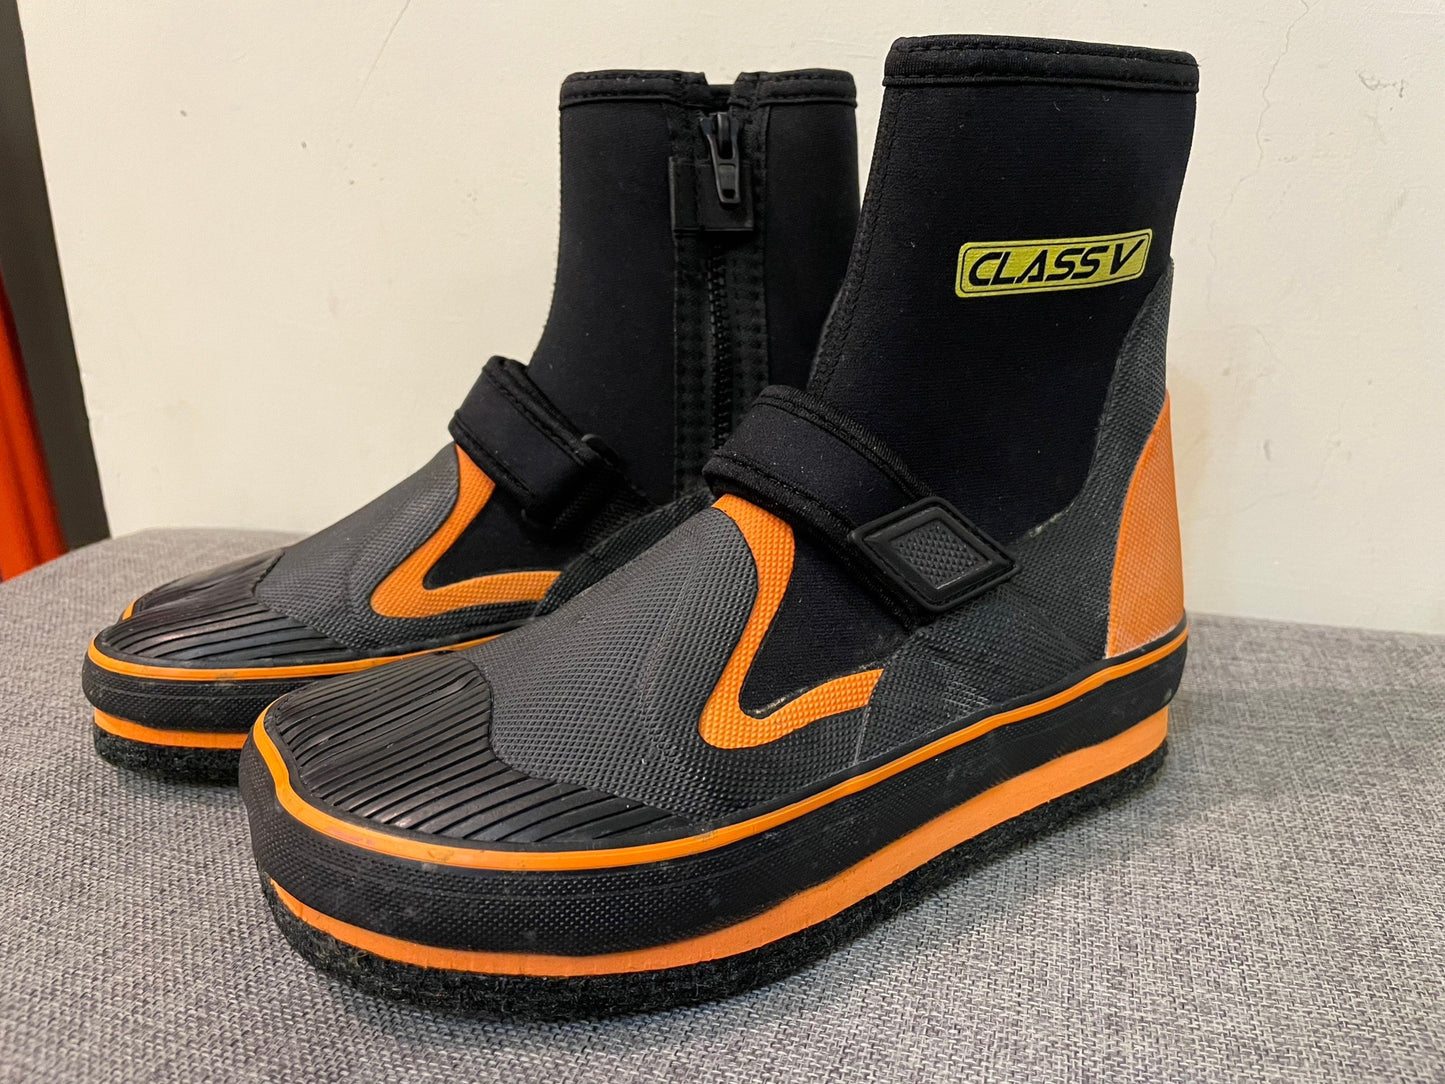 CLASSV 減震內分趾溯溪鞋 外銷日本 台灣製